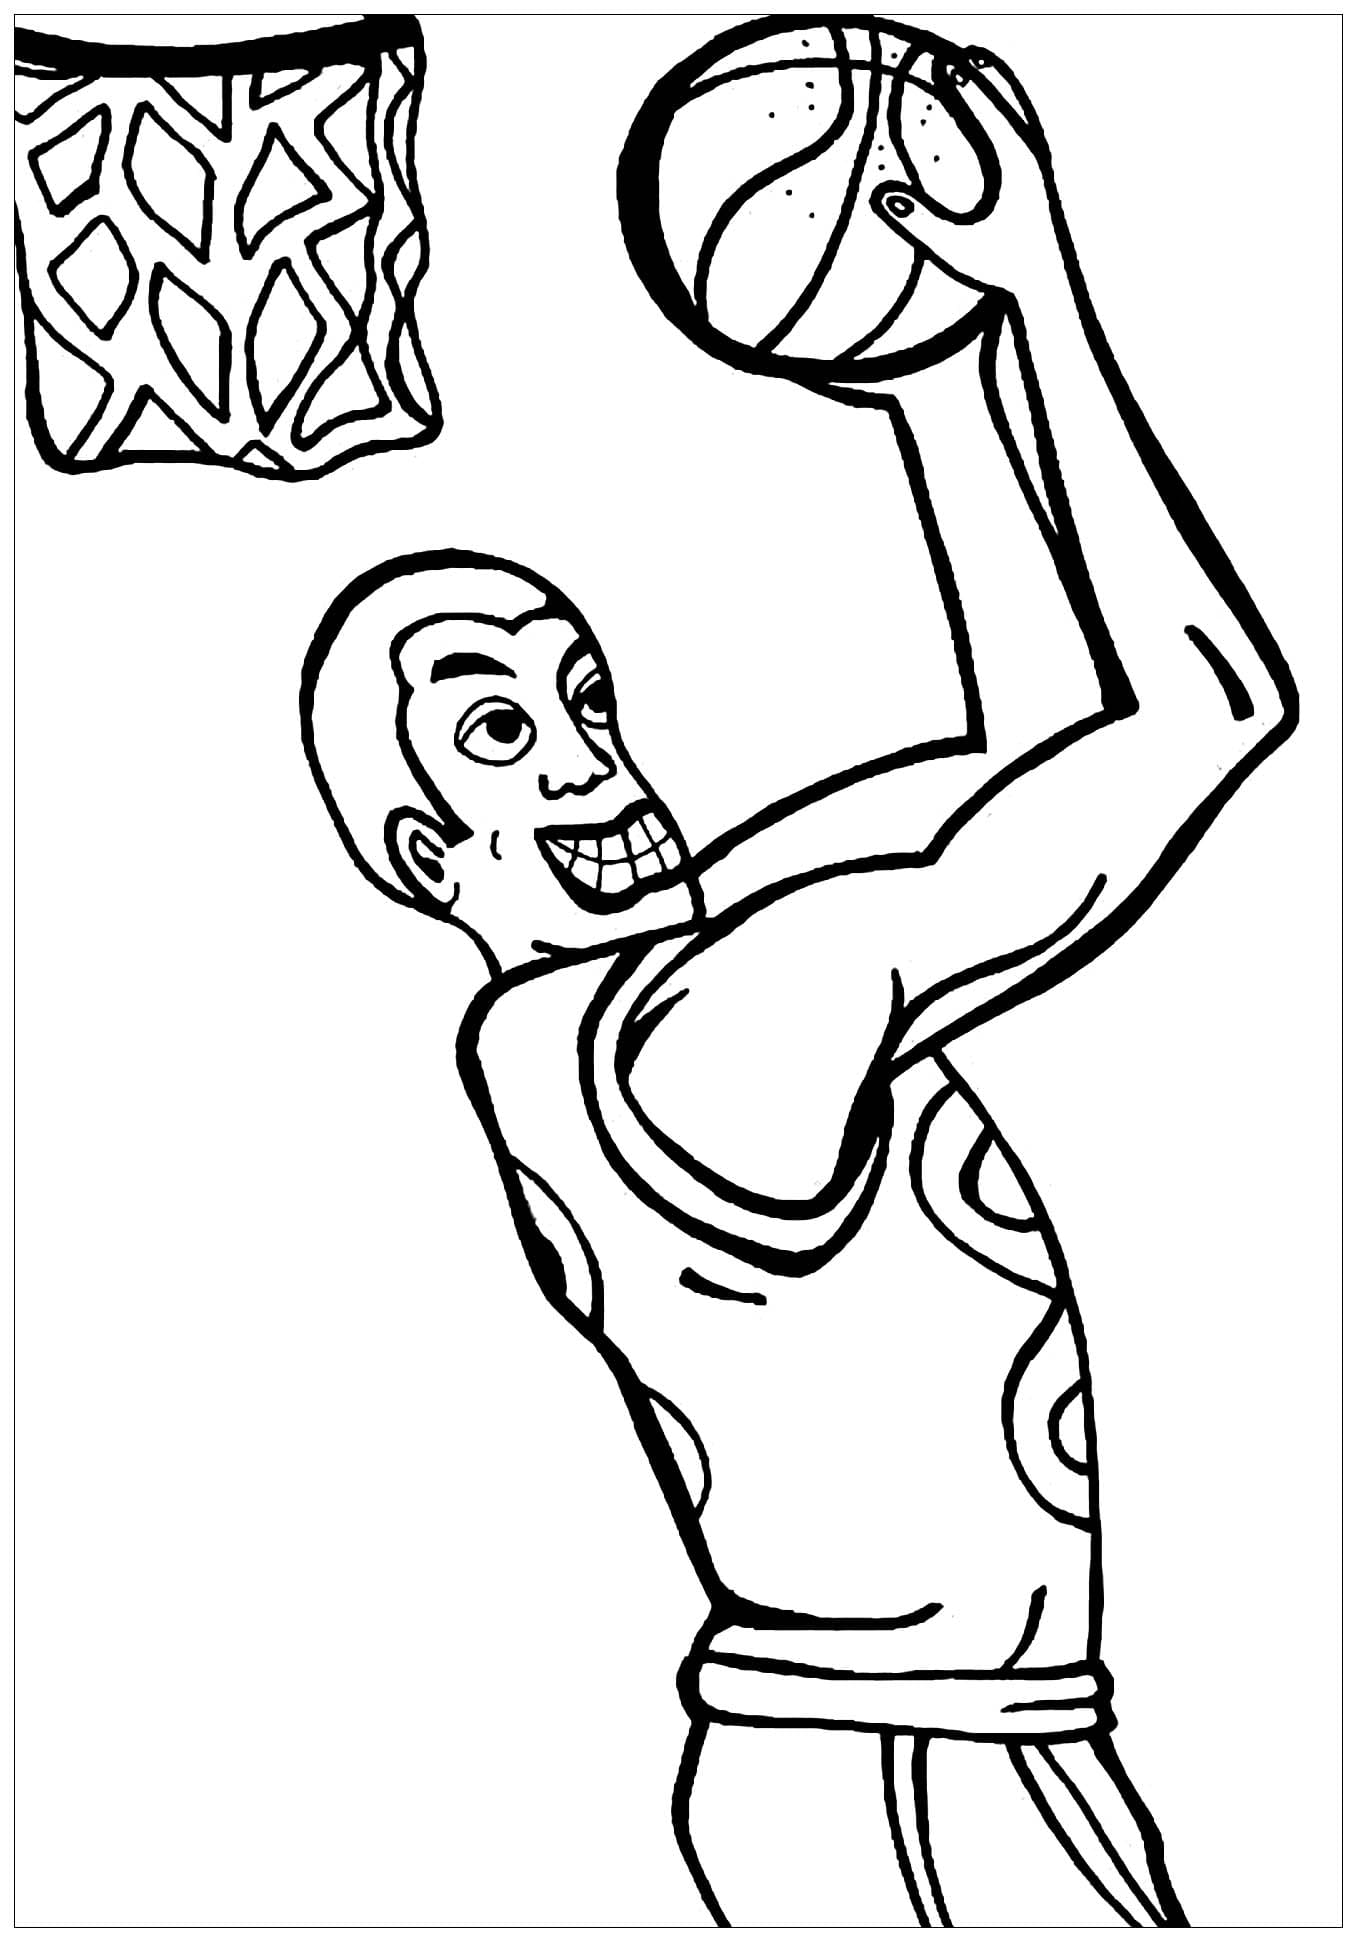 Man Playing Basketball Image